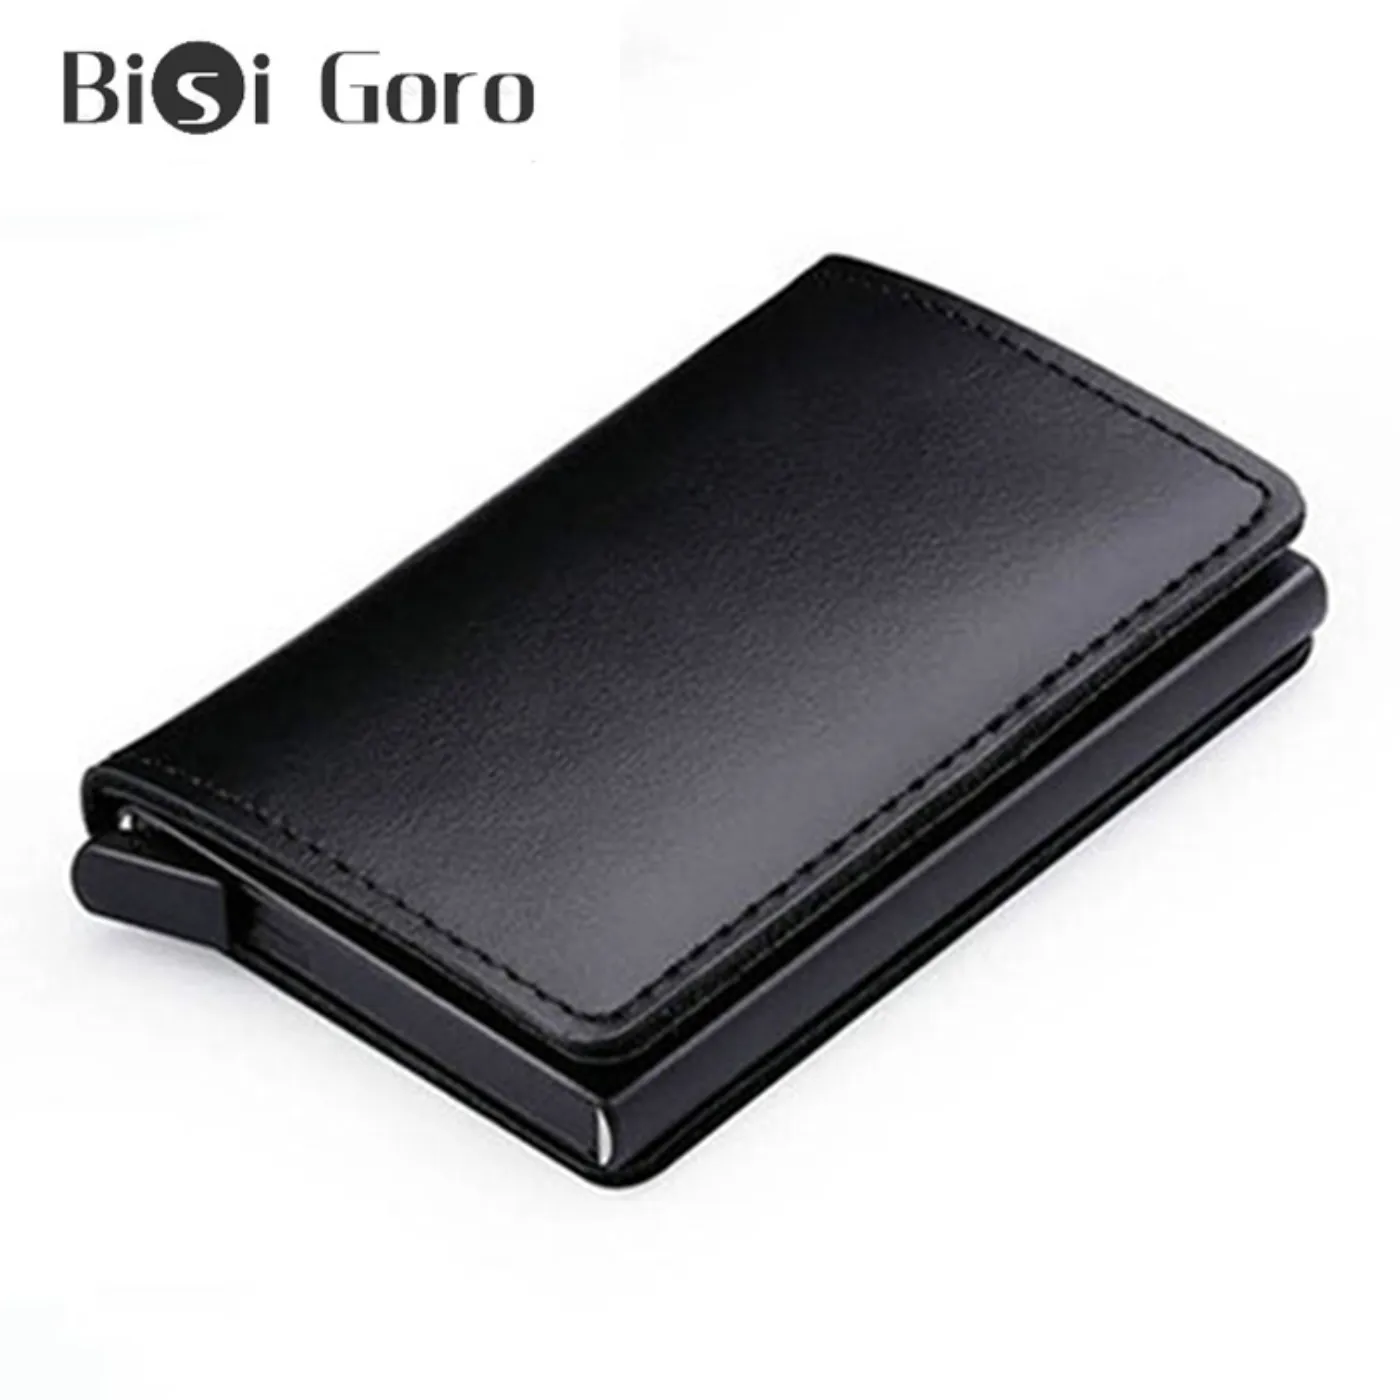 BISI GORO New Genuine Leather Wallet Slim Business Card Holder RFID Blocking...